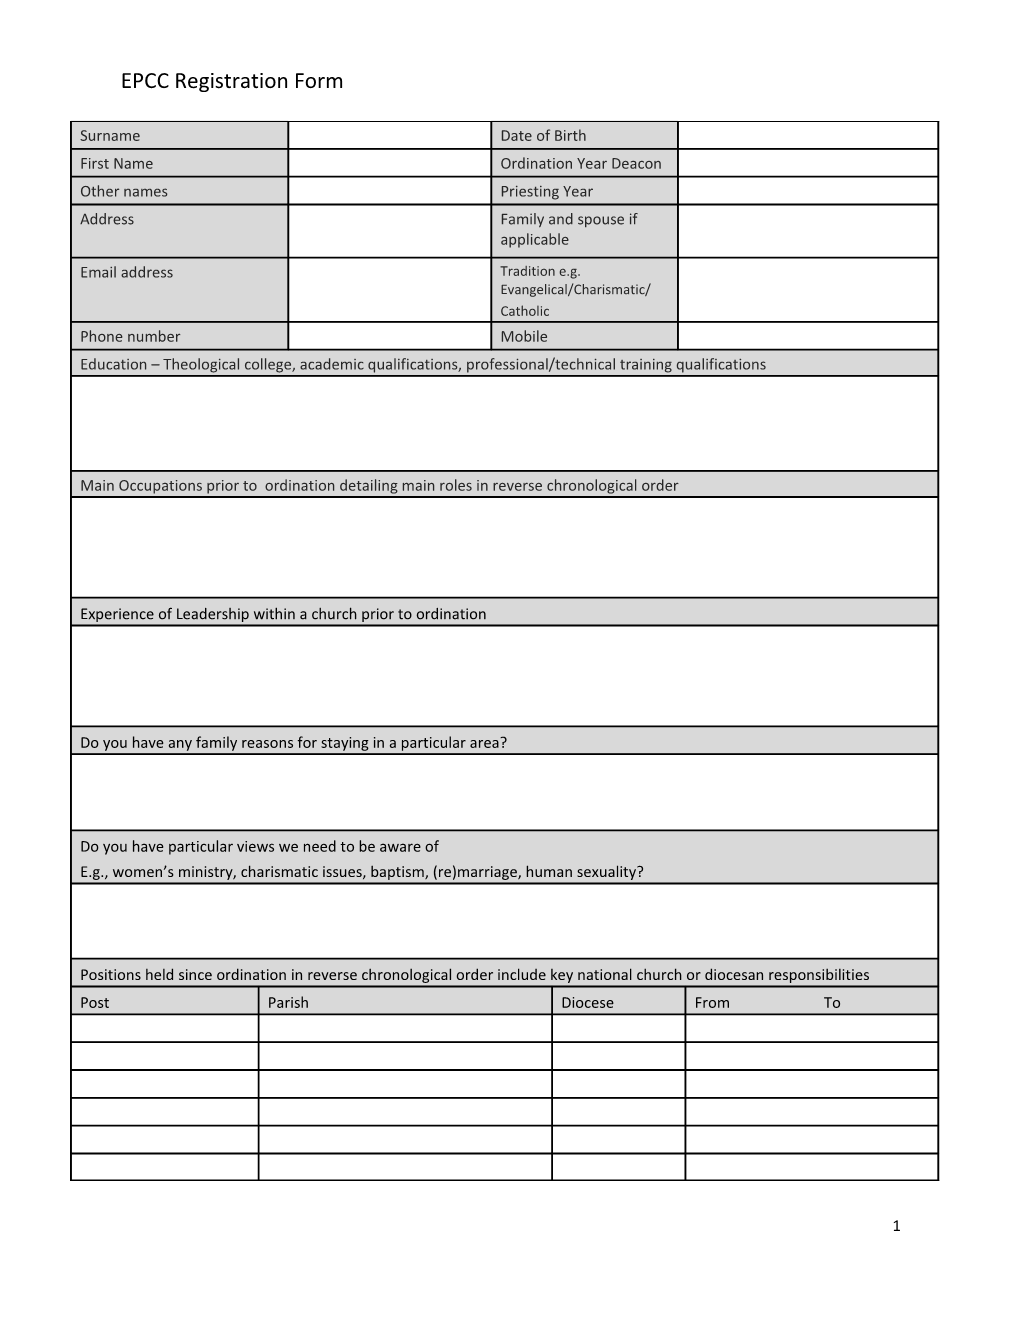 EPCC Registration Form